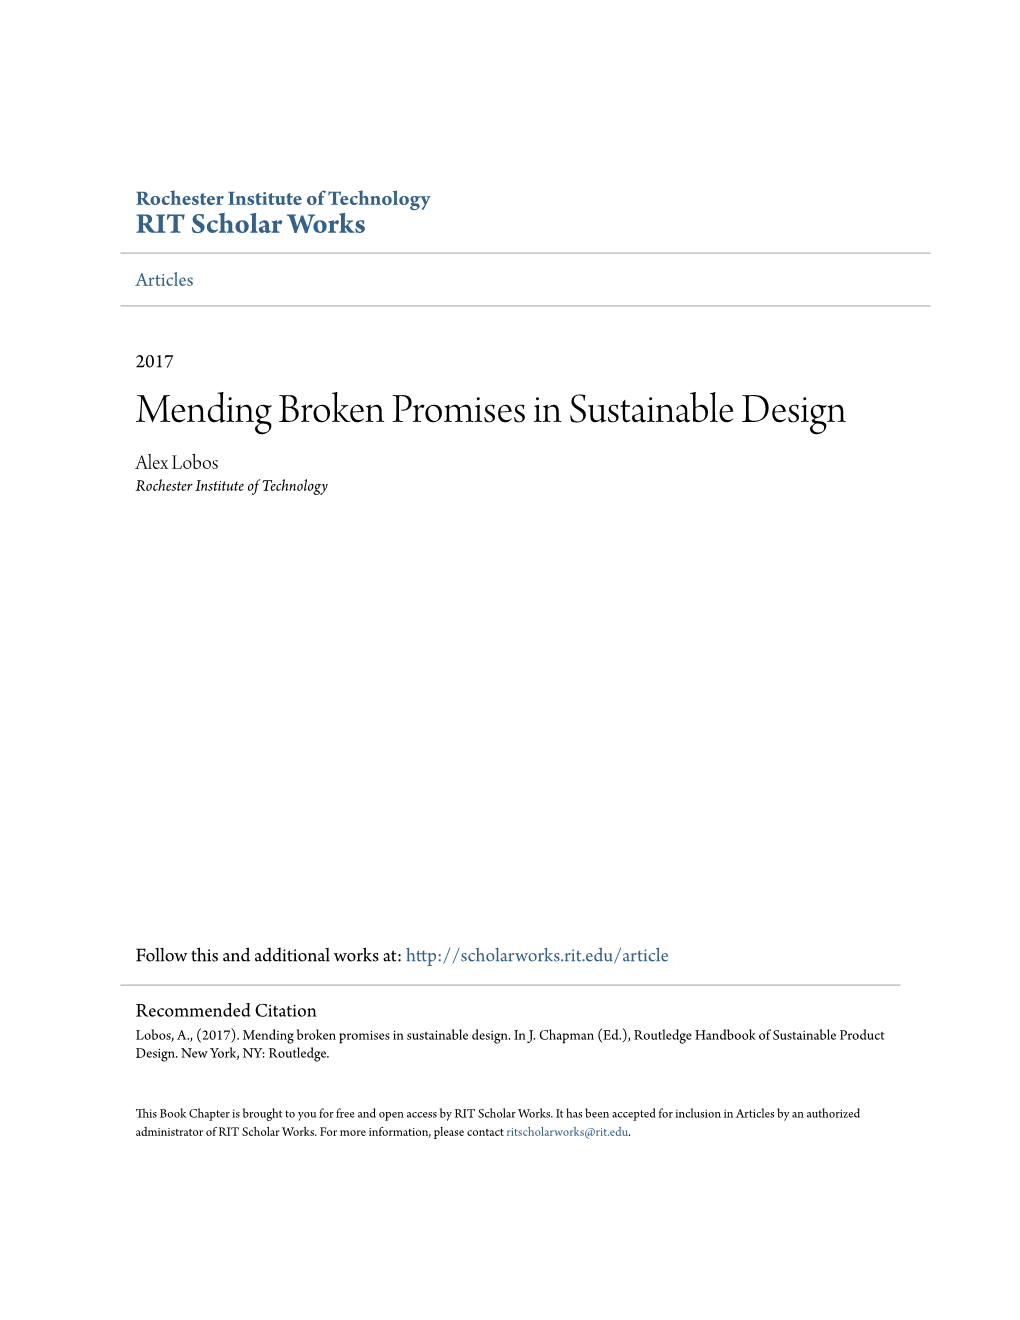 Mending Broken Promises in Sustainable Design Alex Lobos Rochester Institute of Technology